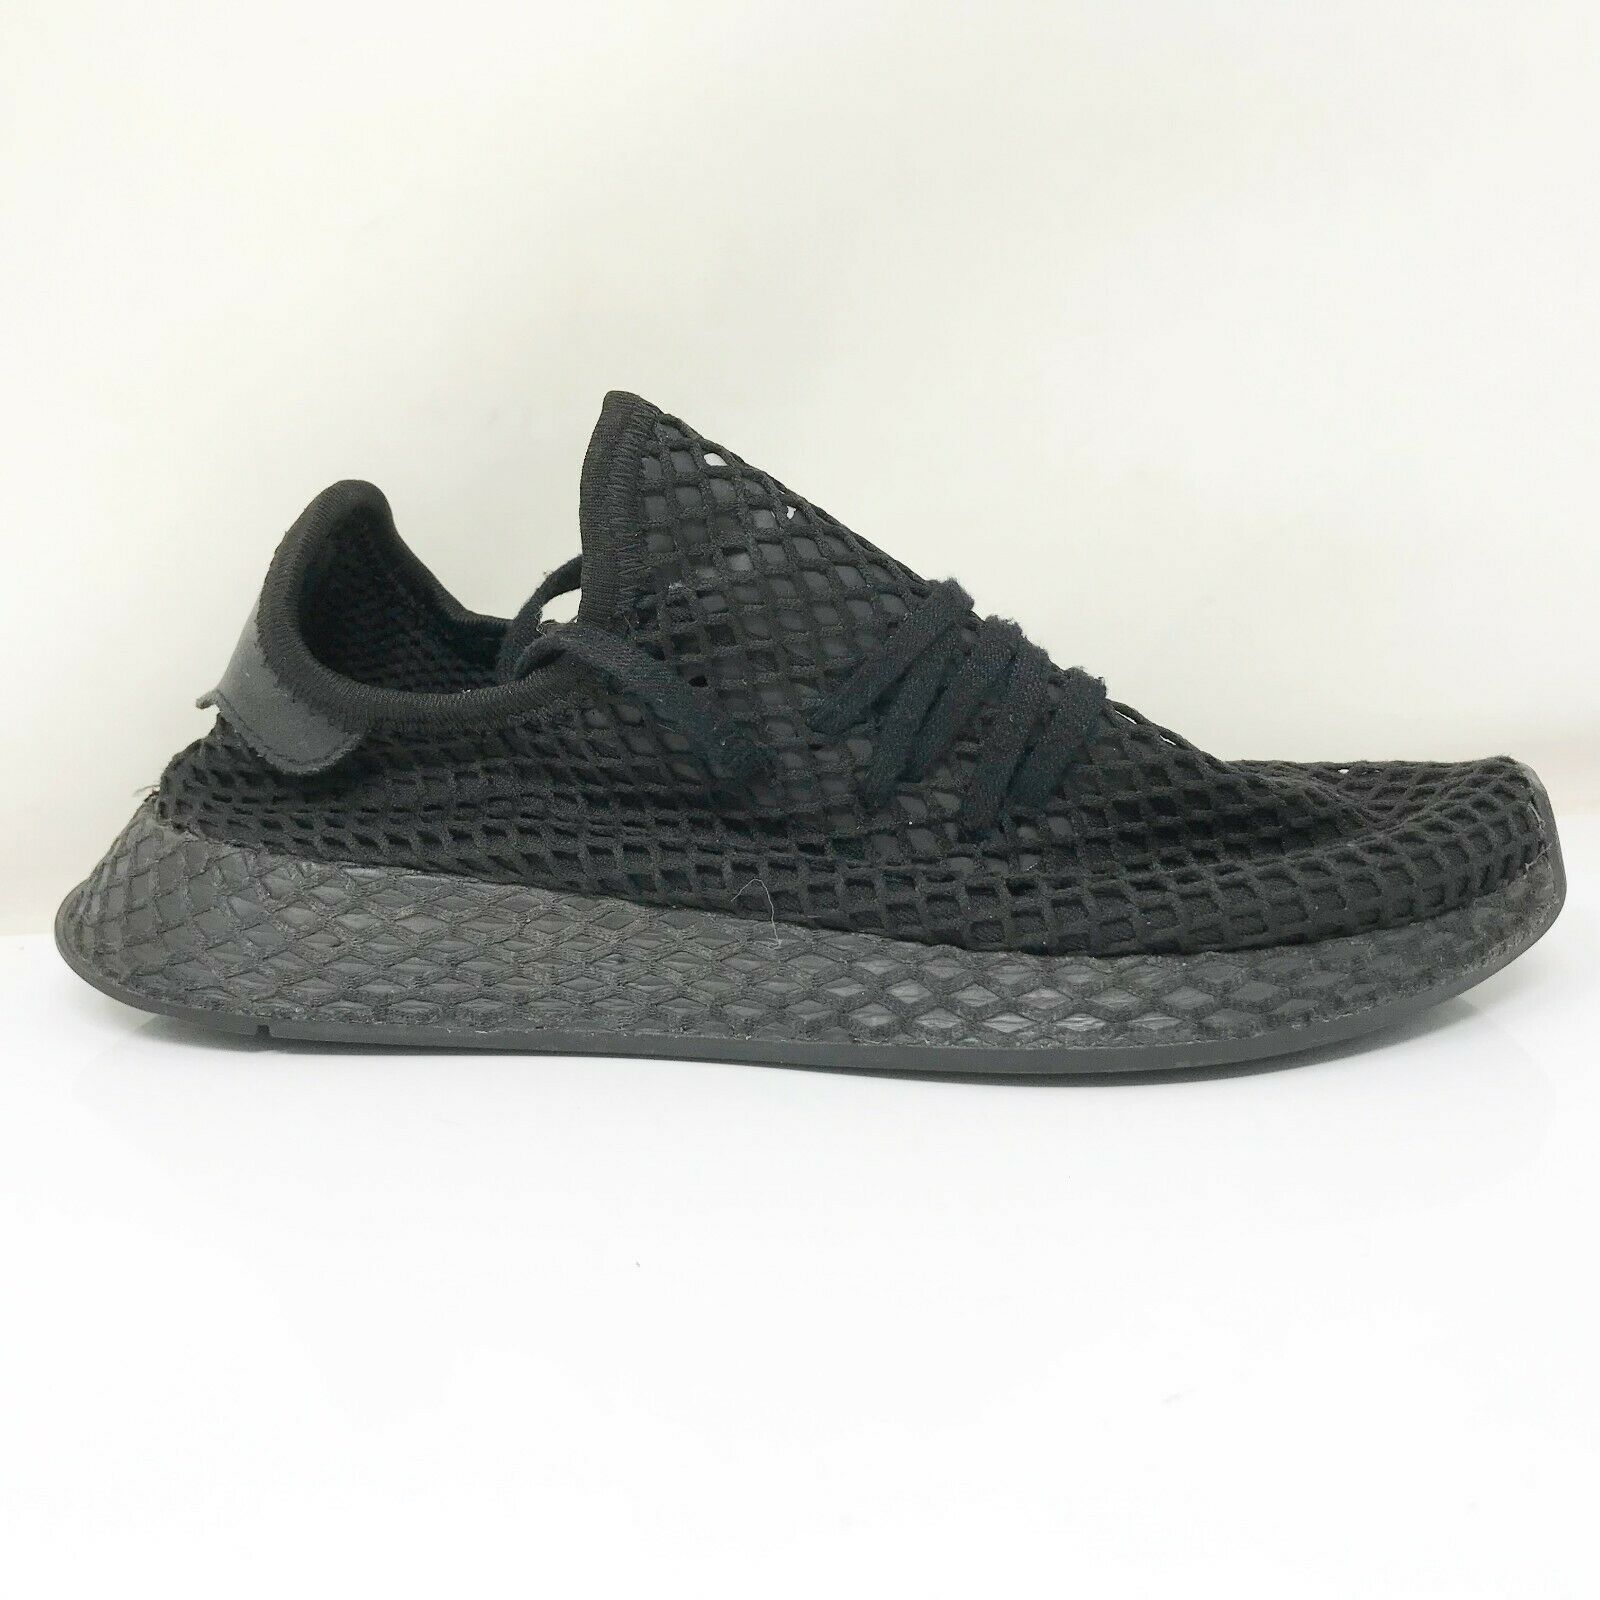 Adidas Mens Deerupt Runner B41877 Black Running Shoes Sneakers Size 6.5